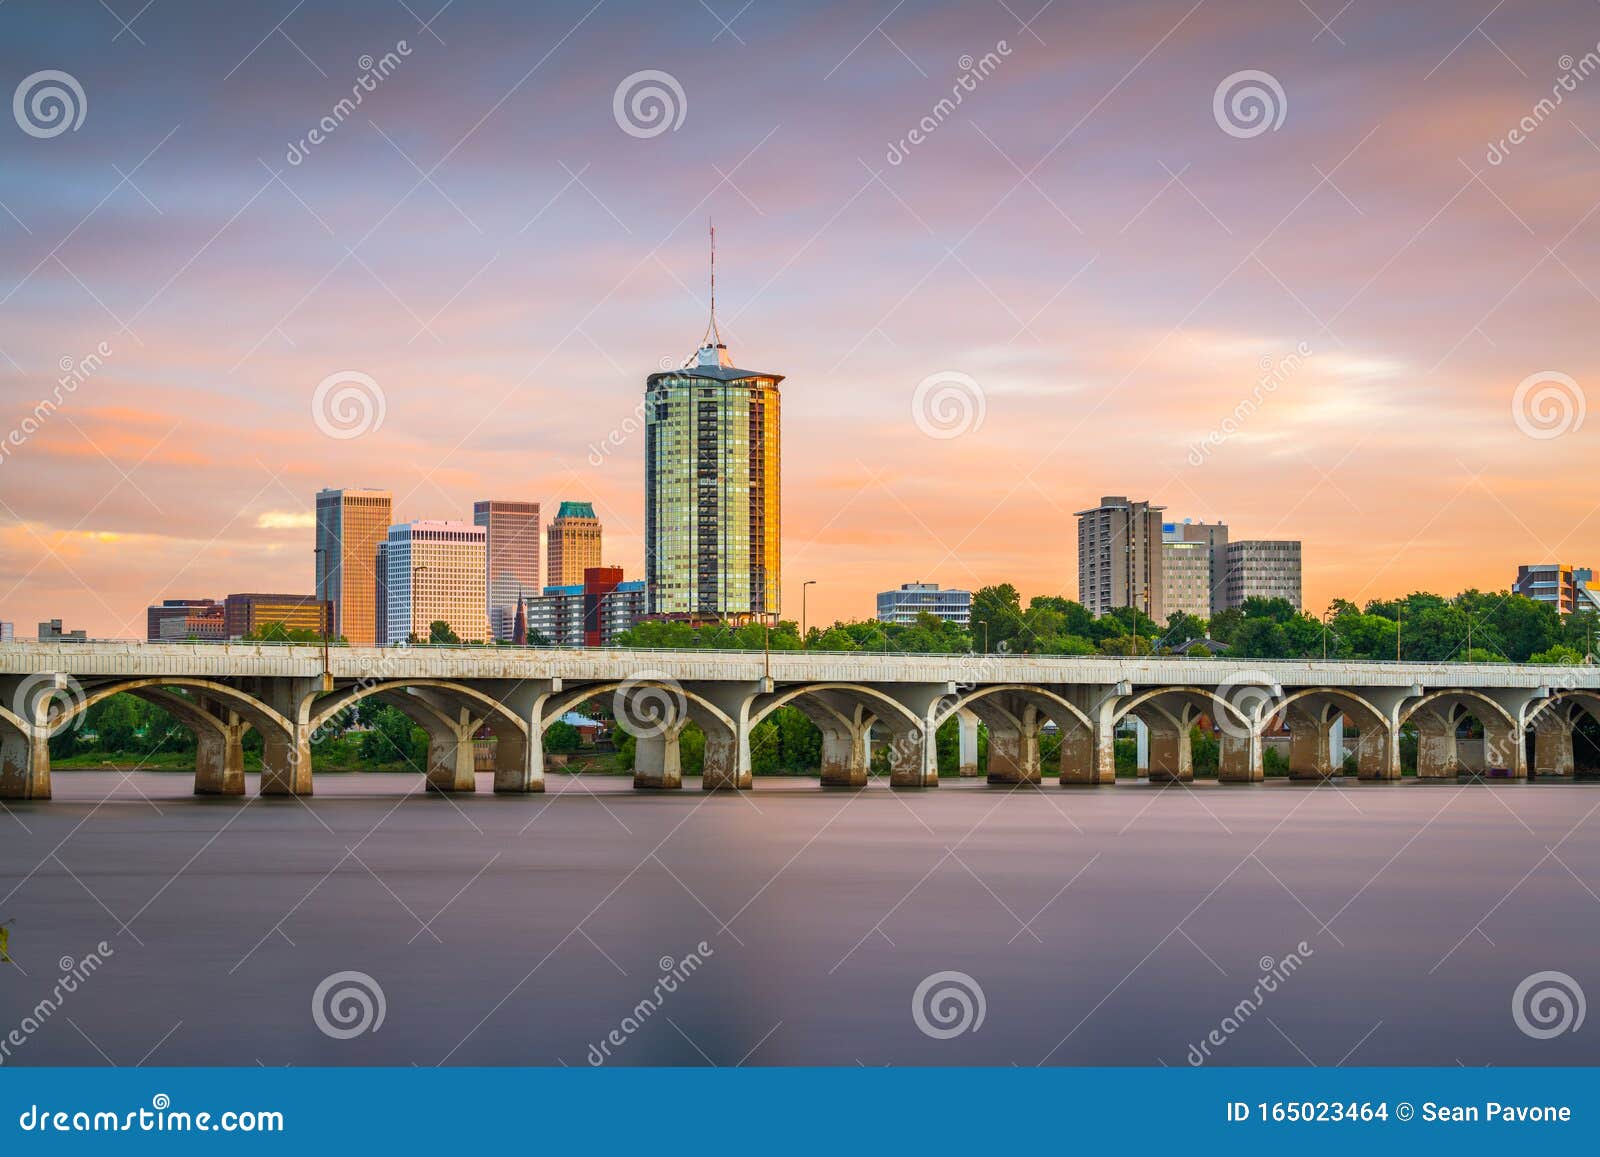 tulsa, oklahoma, usa downtown skyline on the arkansas river